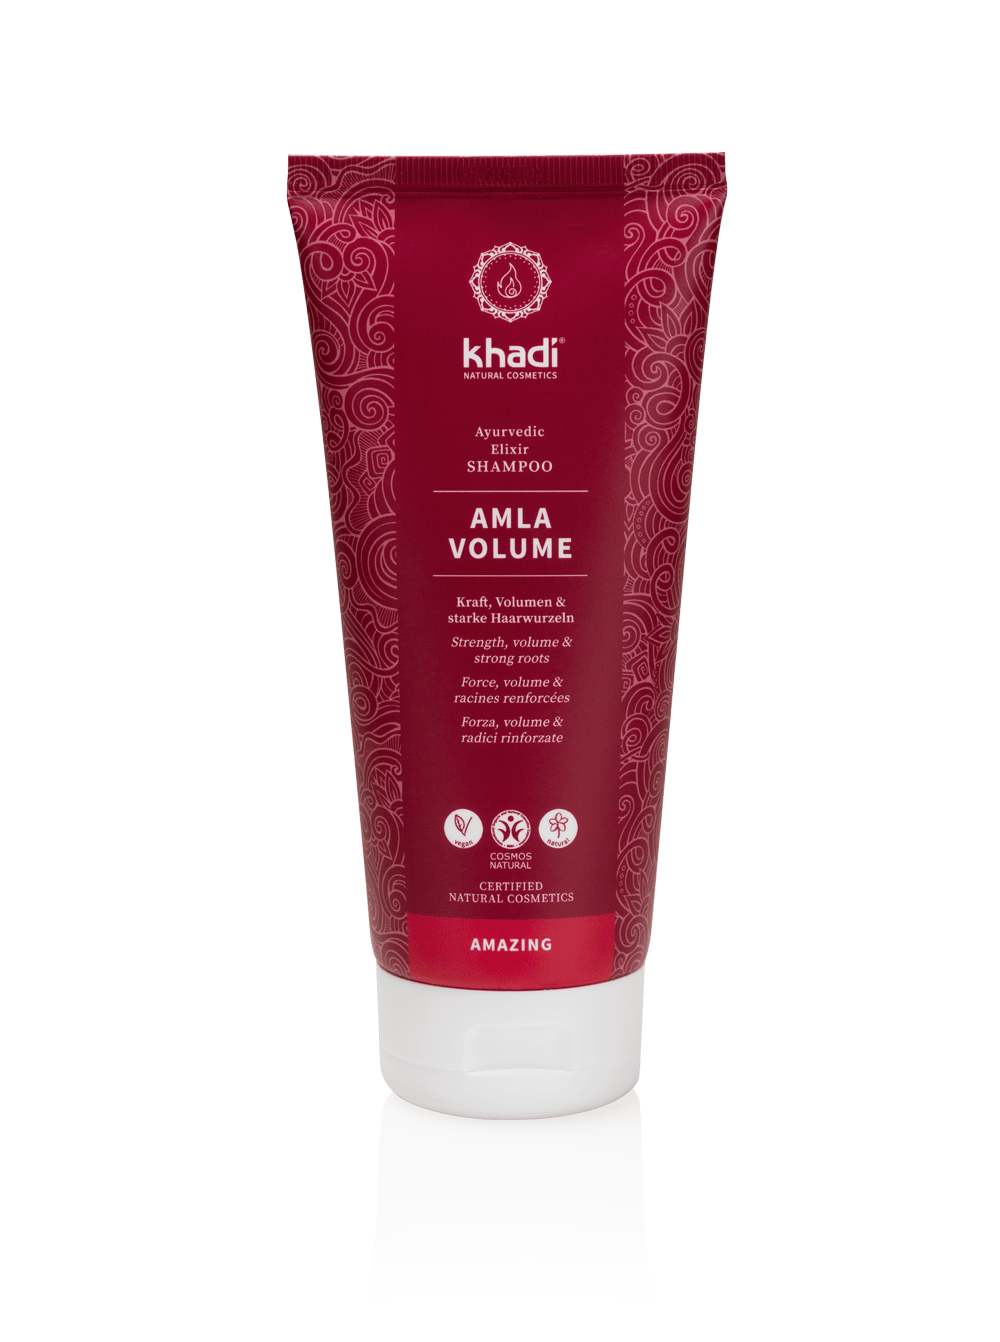 Khadi Natural - Online Store for Skin, Hair & Body Care